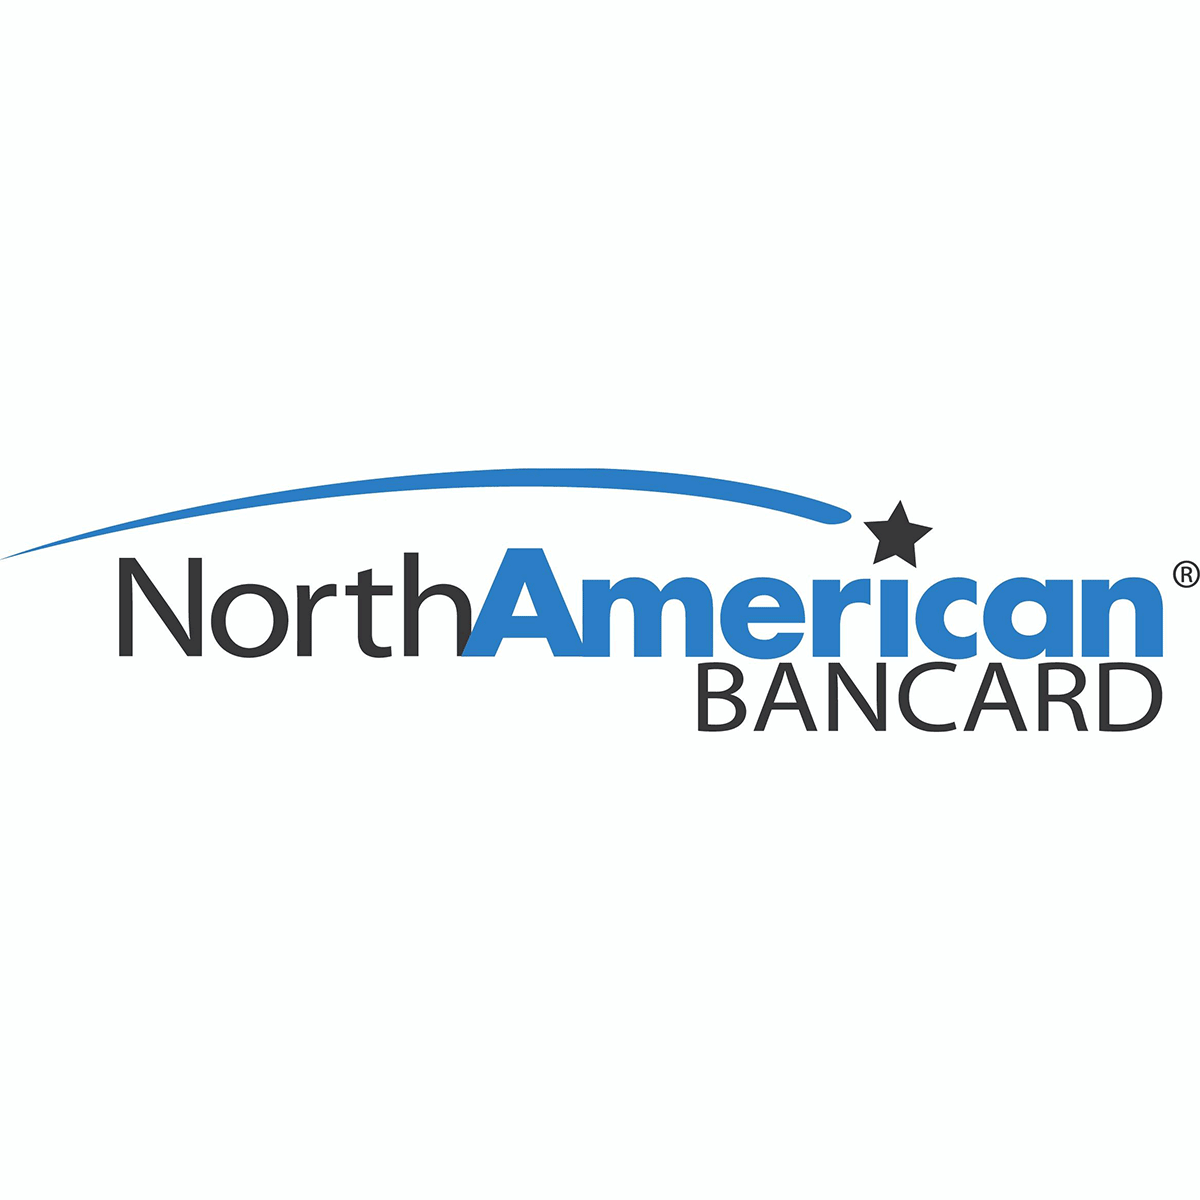 (c) Northamericanbancard.com